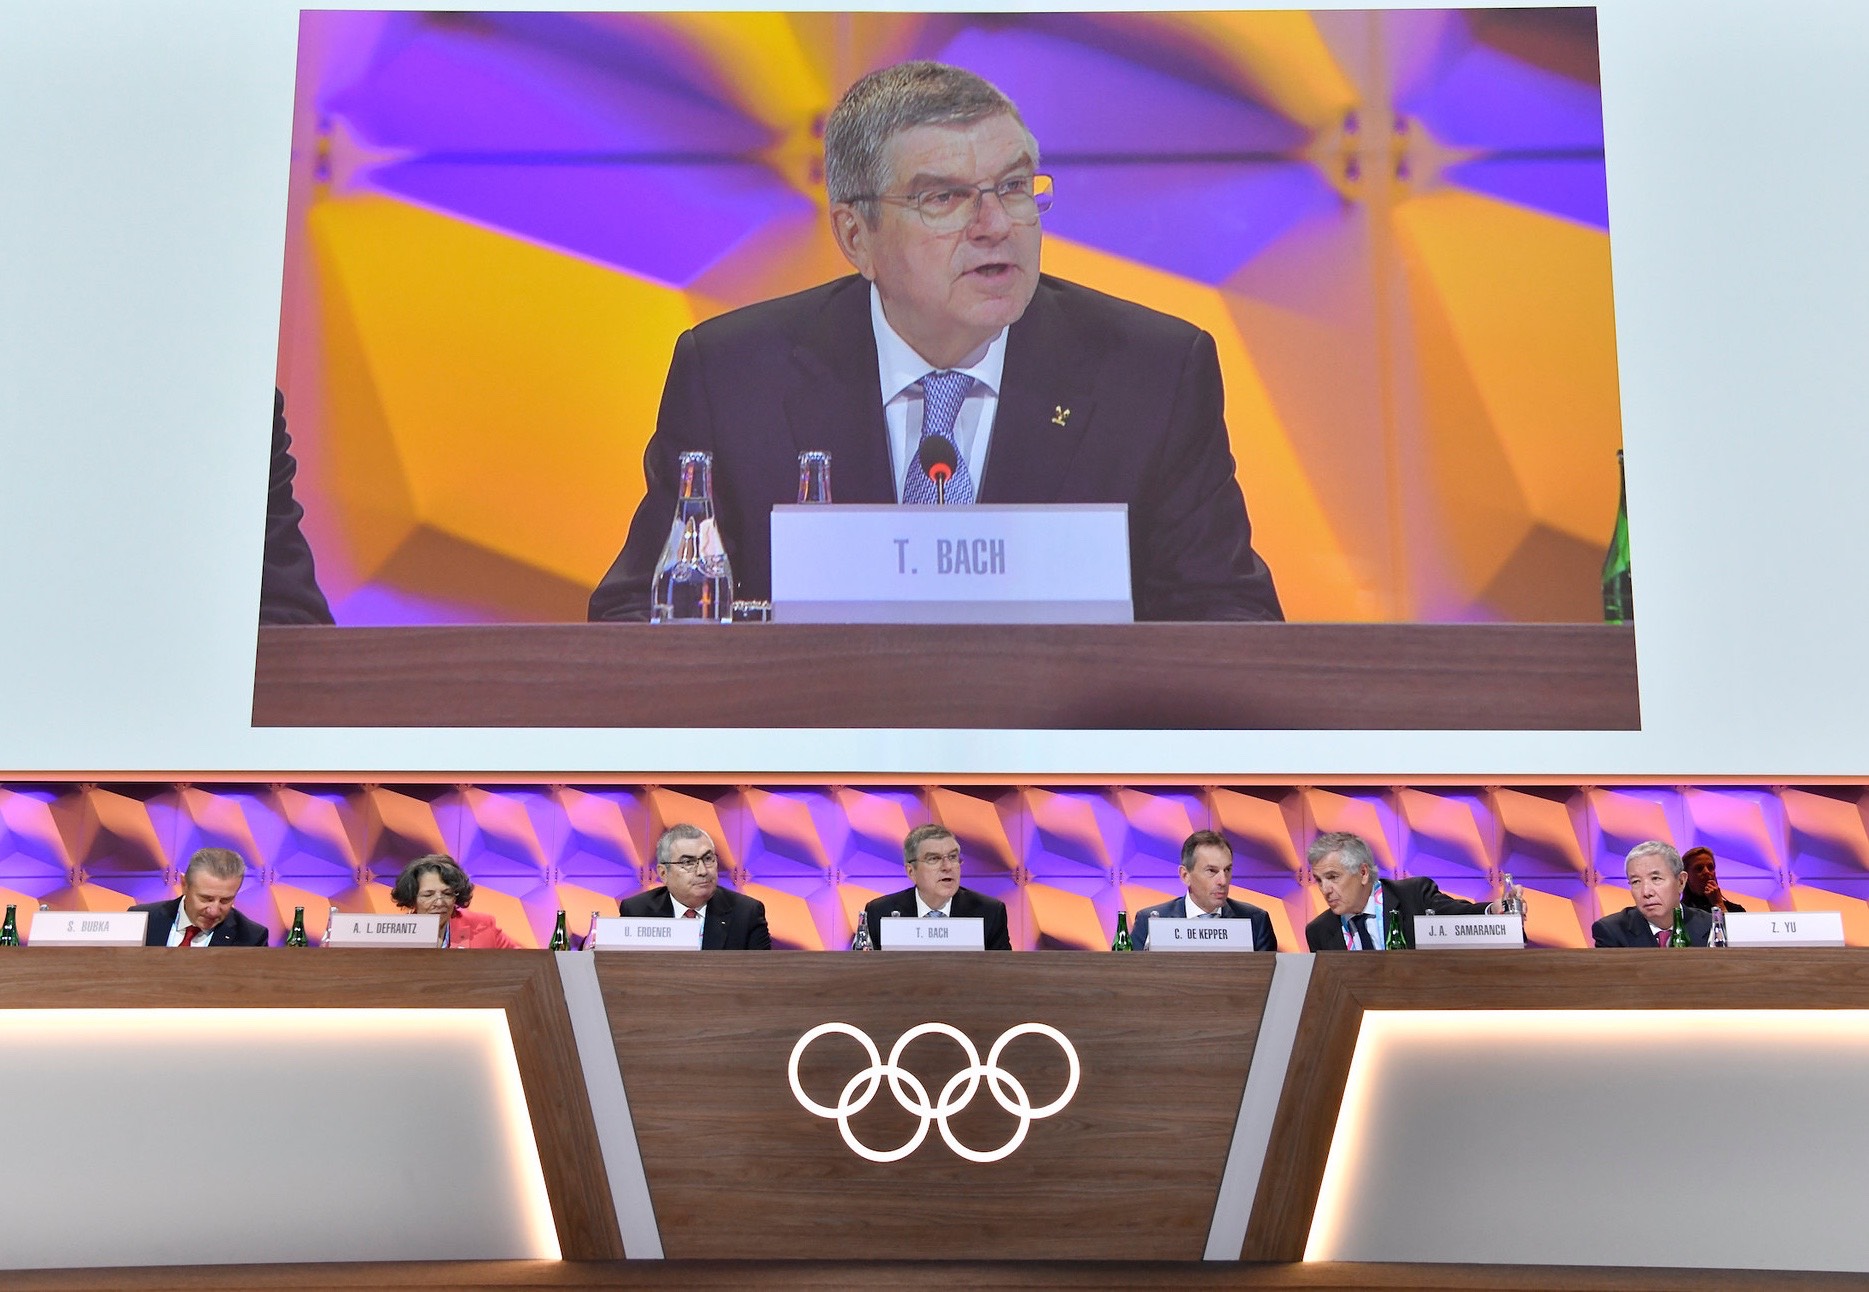 Kasus Covid-19 Meningkat, Presiden IOC Tunda Kunjungan ke Jepang